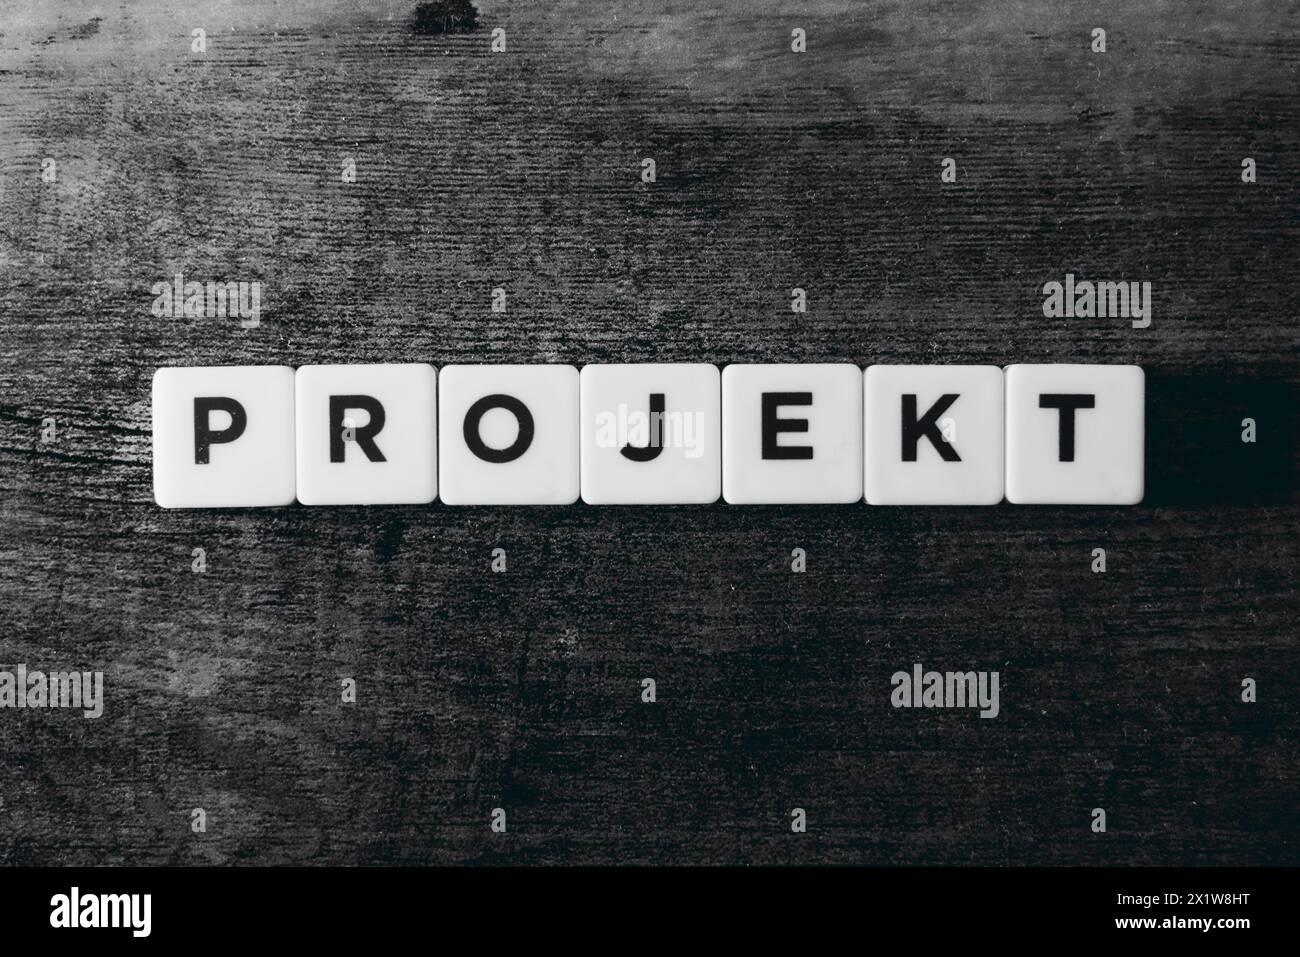 Projekt, Wort, Wörter, Scrabble, Buchstaben Foto Stock